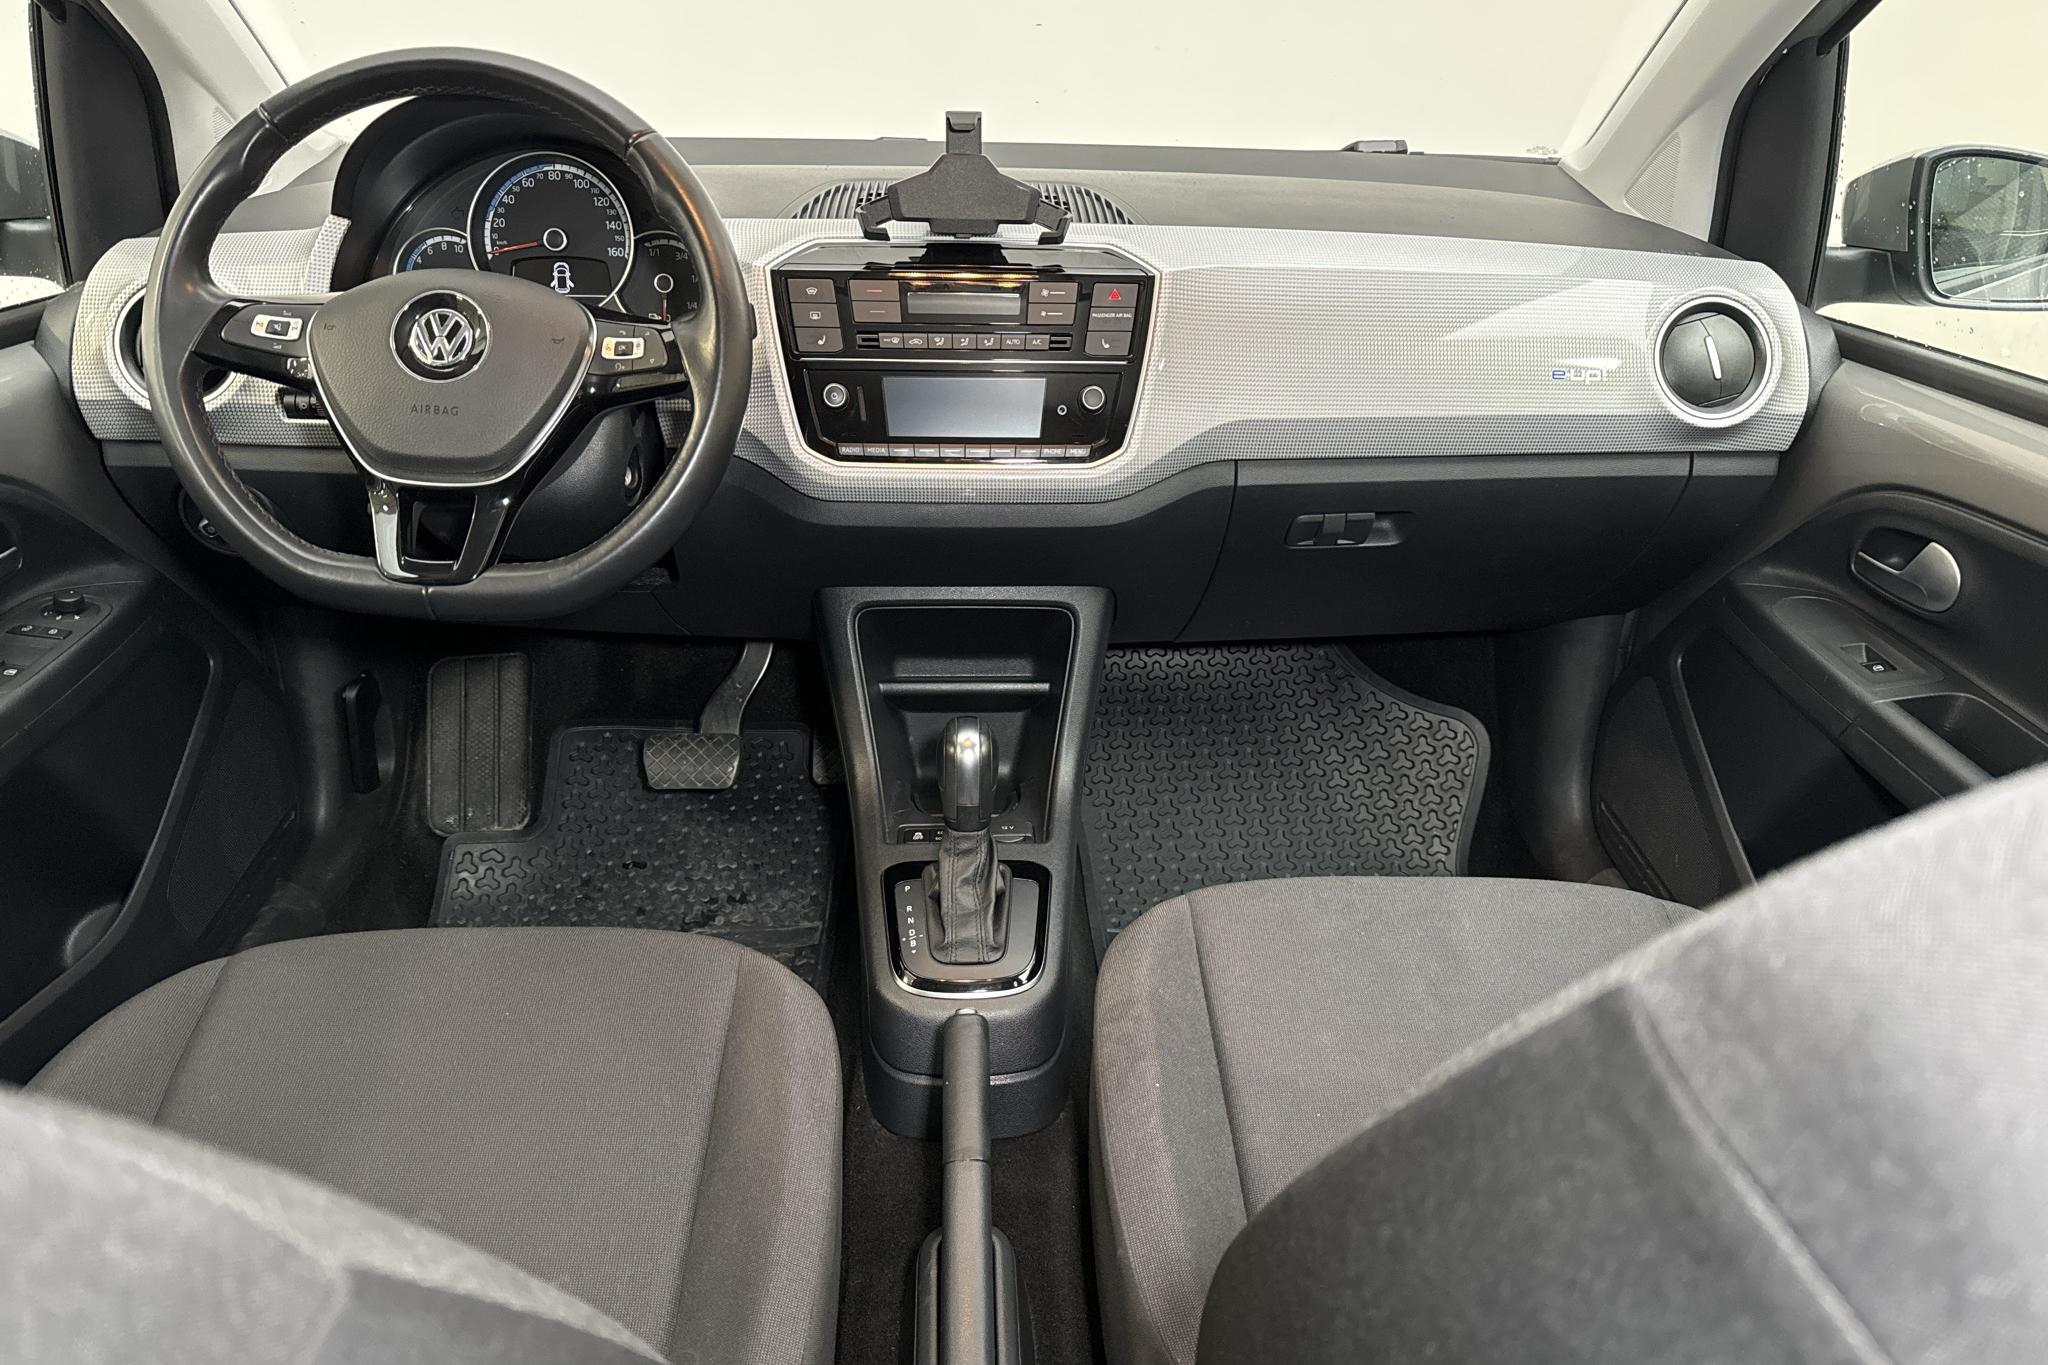 VW e-up! (83hk) - 30 690 km - Automatic - Light Brown - 2019